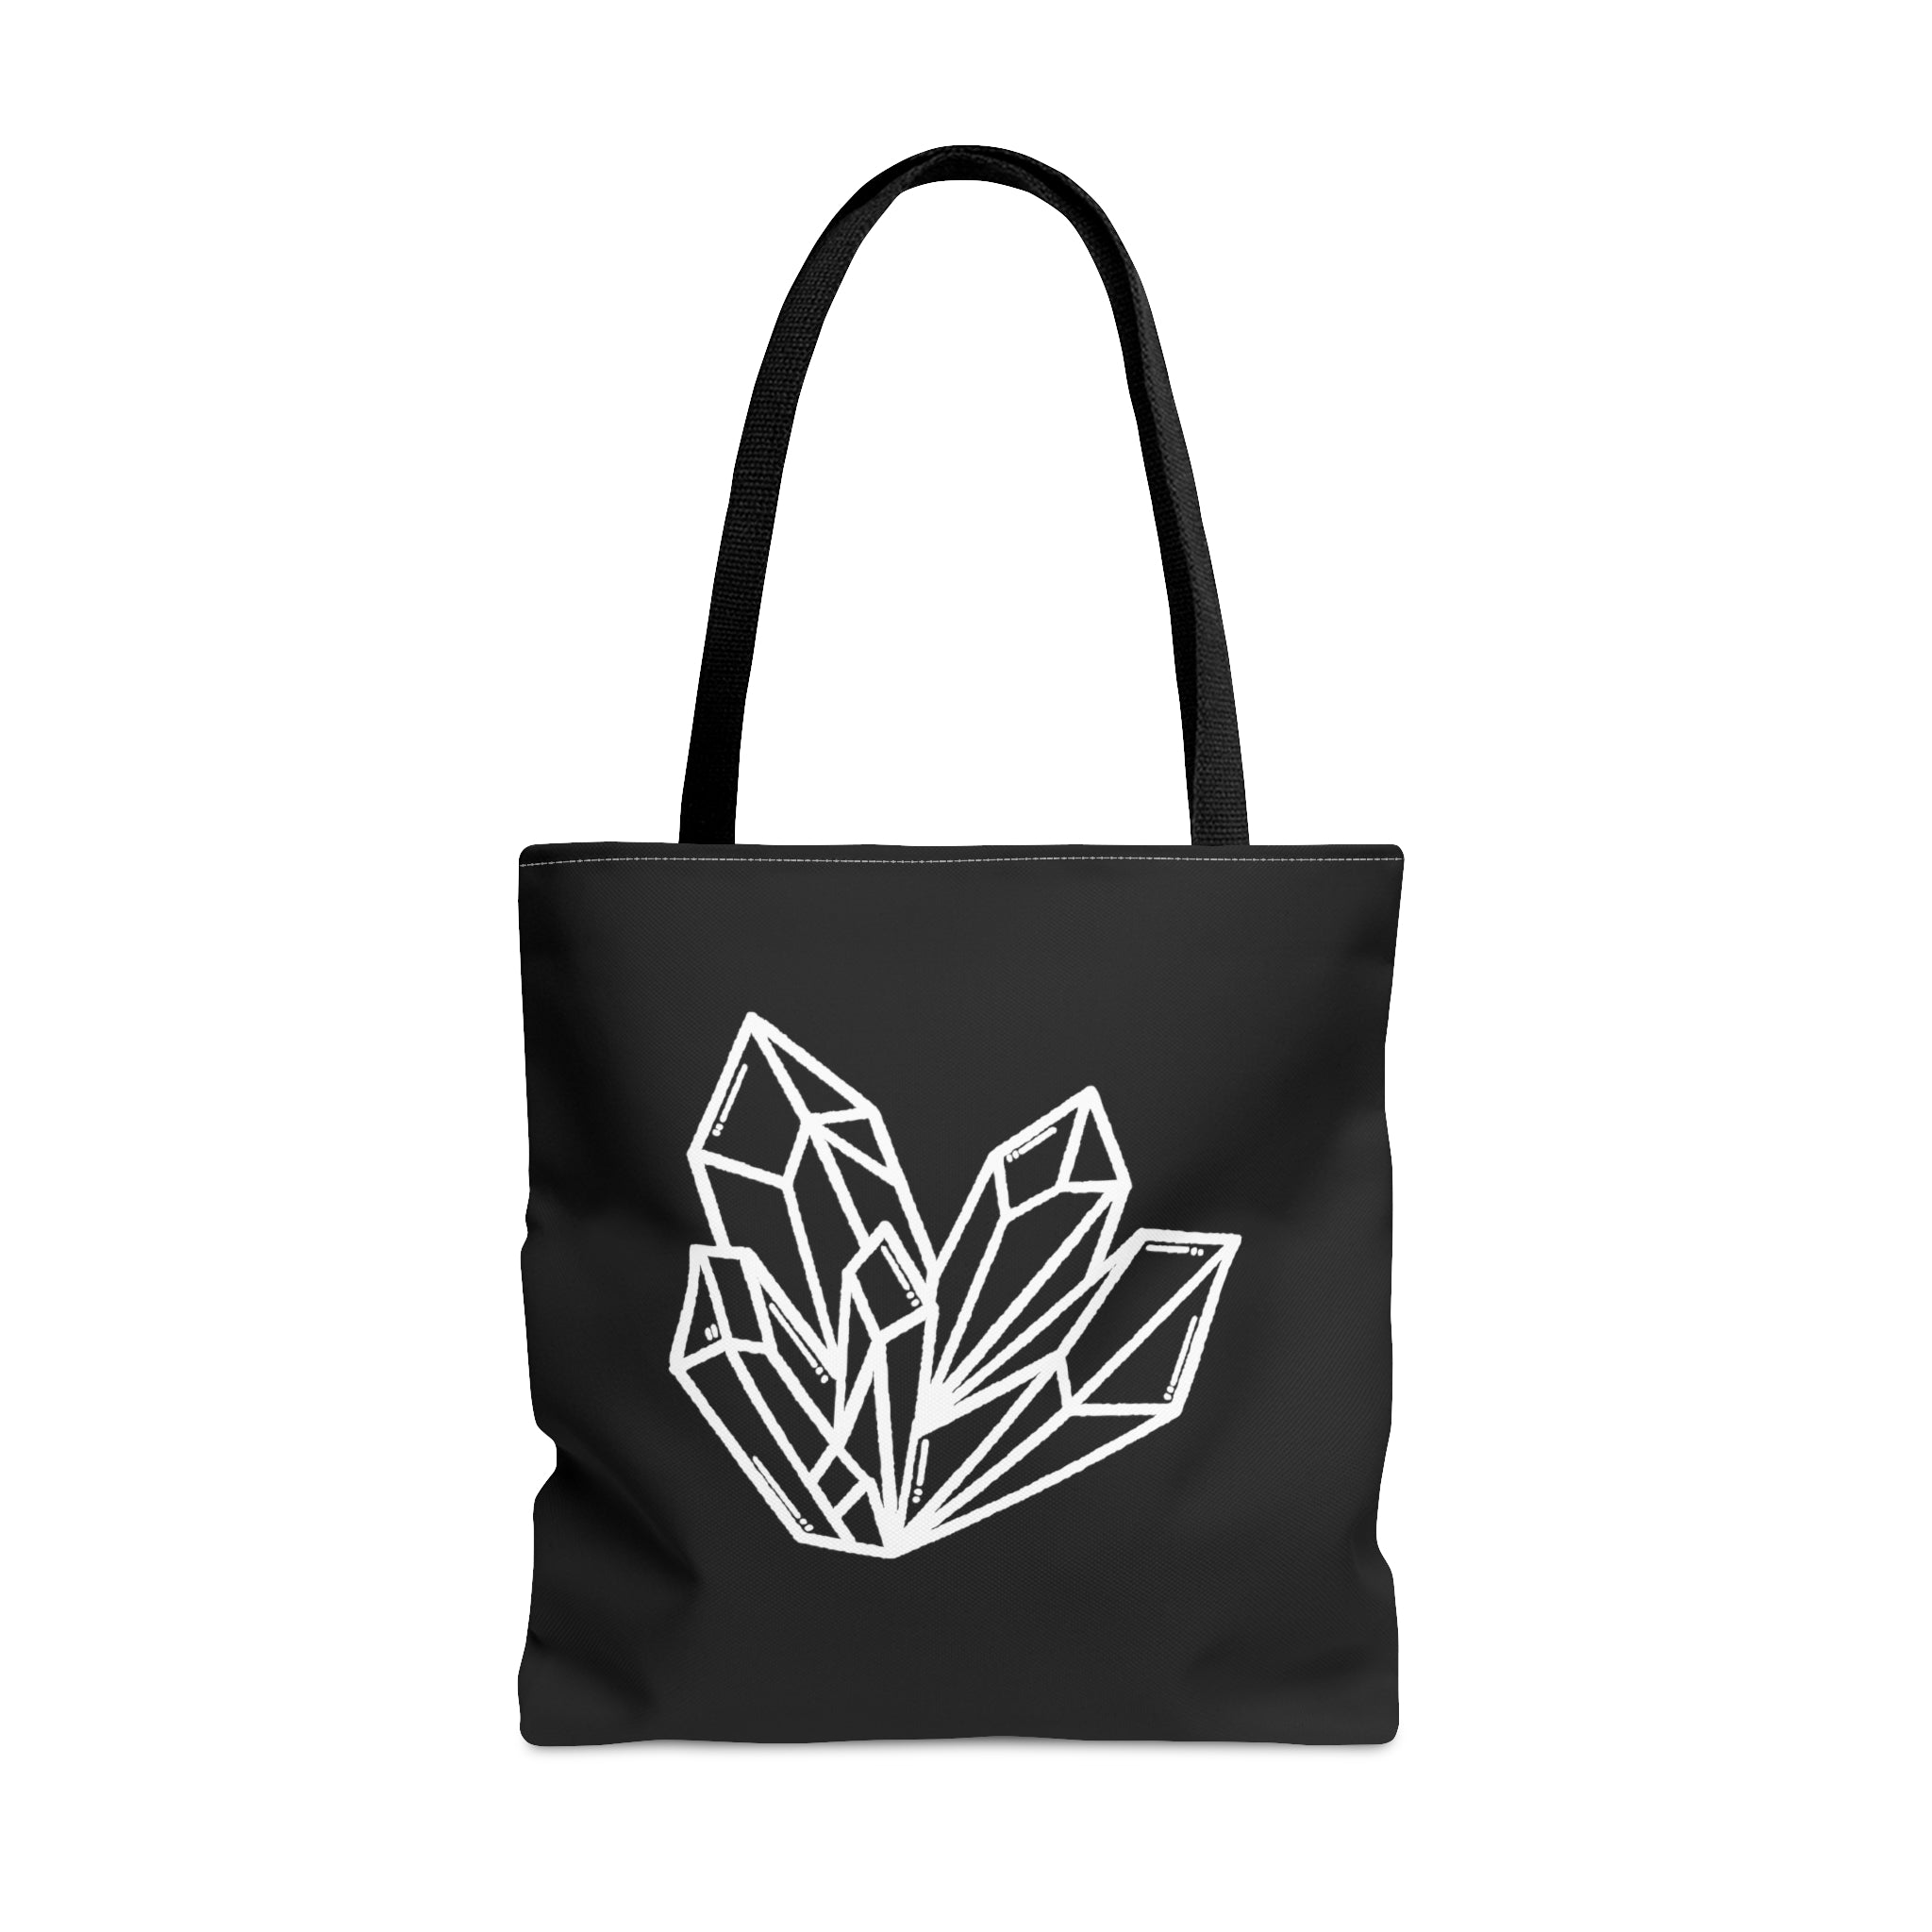 Crystals Design Tote Bag